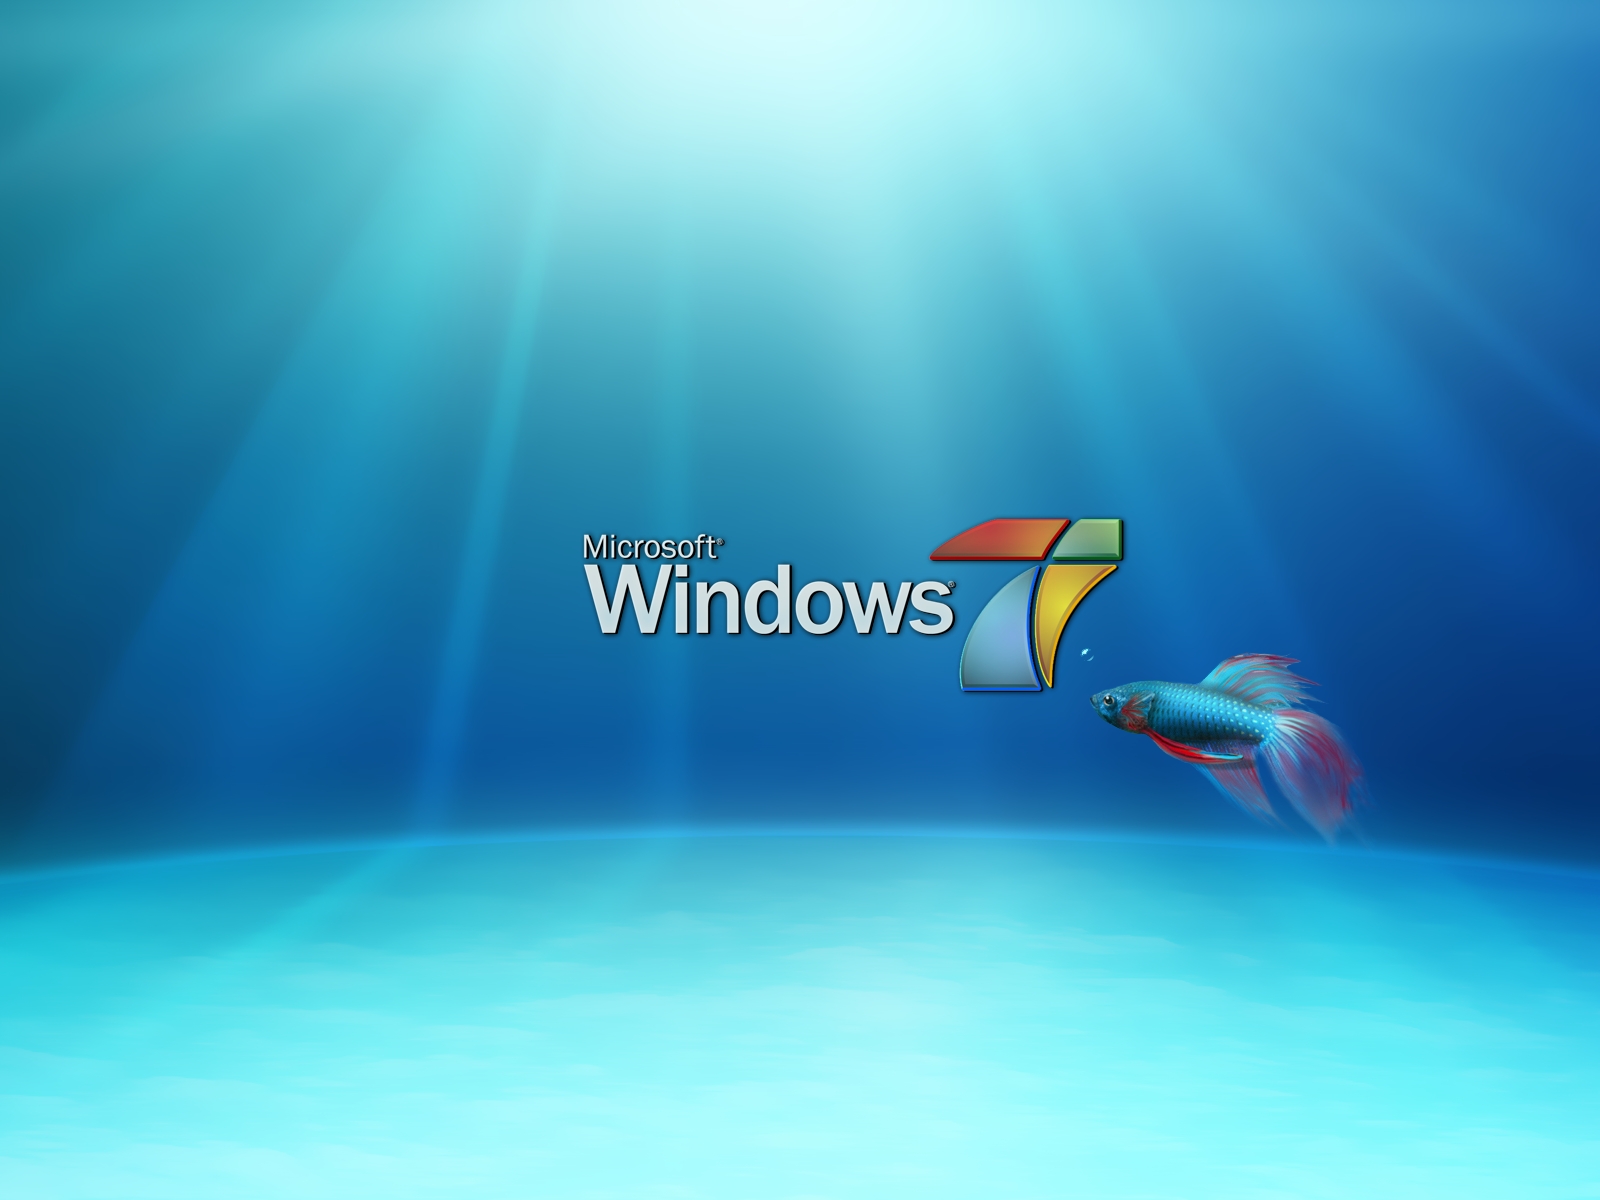 Windows 7 HD Wallpaper - Wallpapers